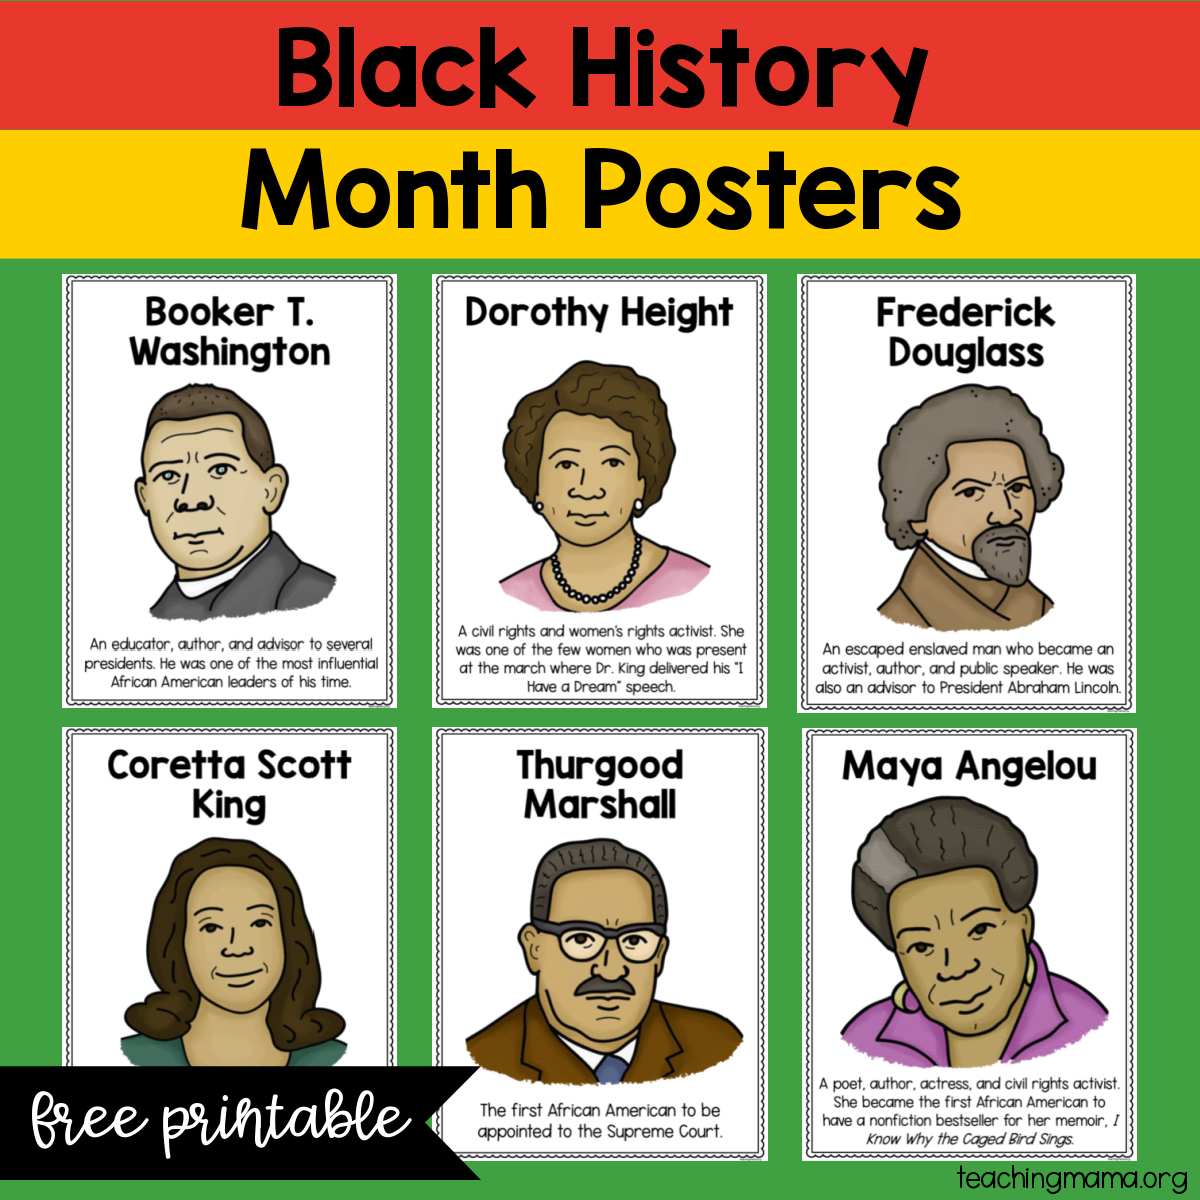 Black History Month Posters Free Printable LaptrinhX / News